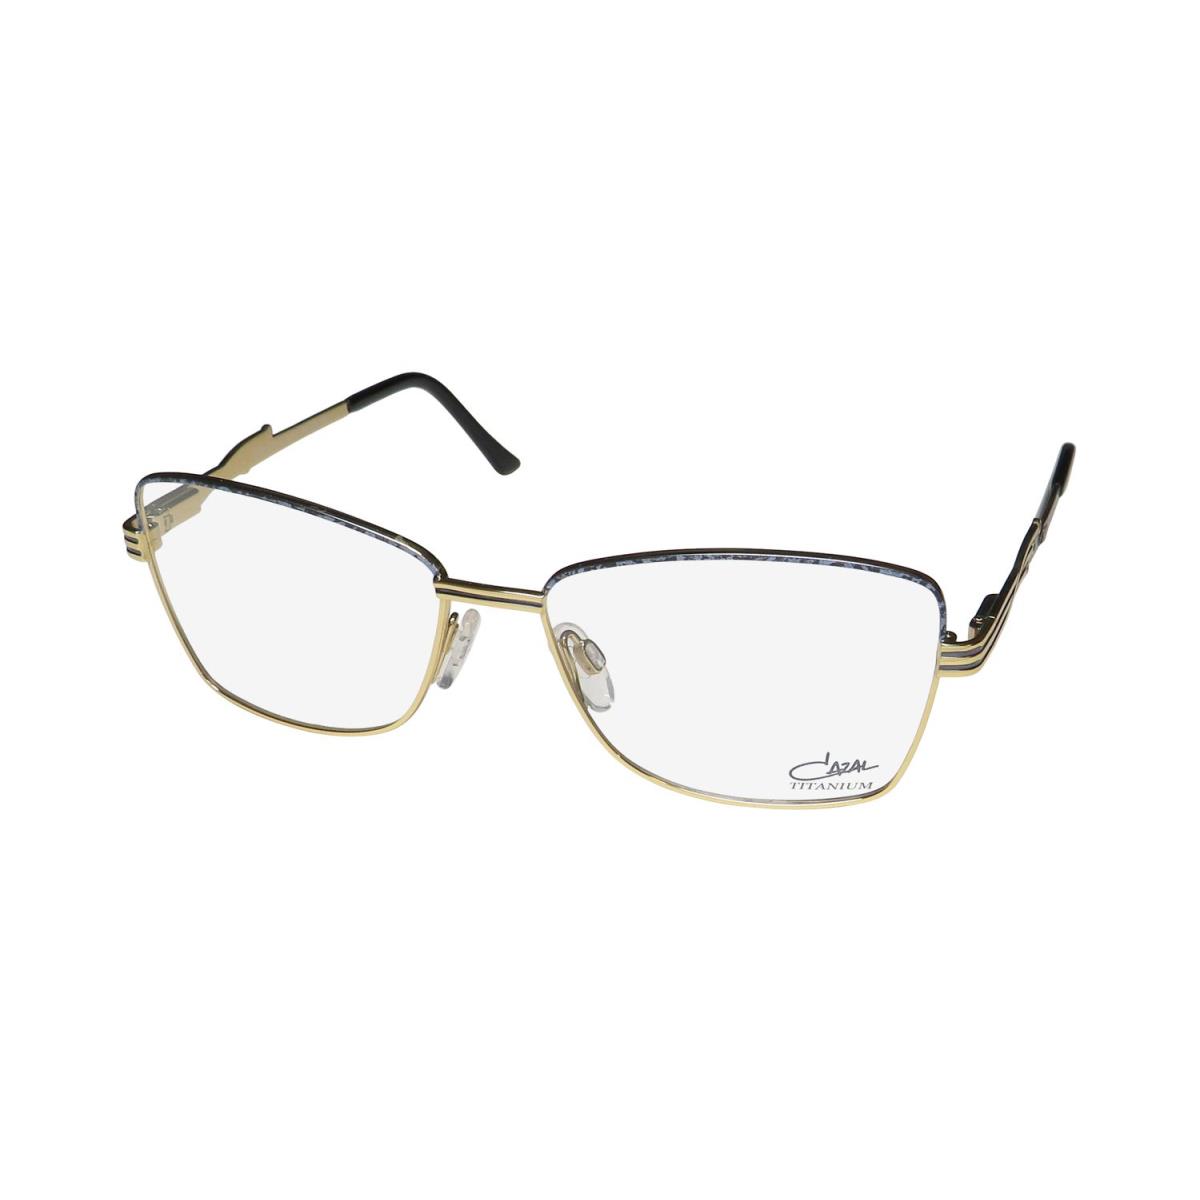 Cazal 4291 Titanium Made IN Germany Premium Quality Sleek Eyeglass Frame/glasses Gold / Black